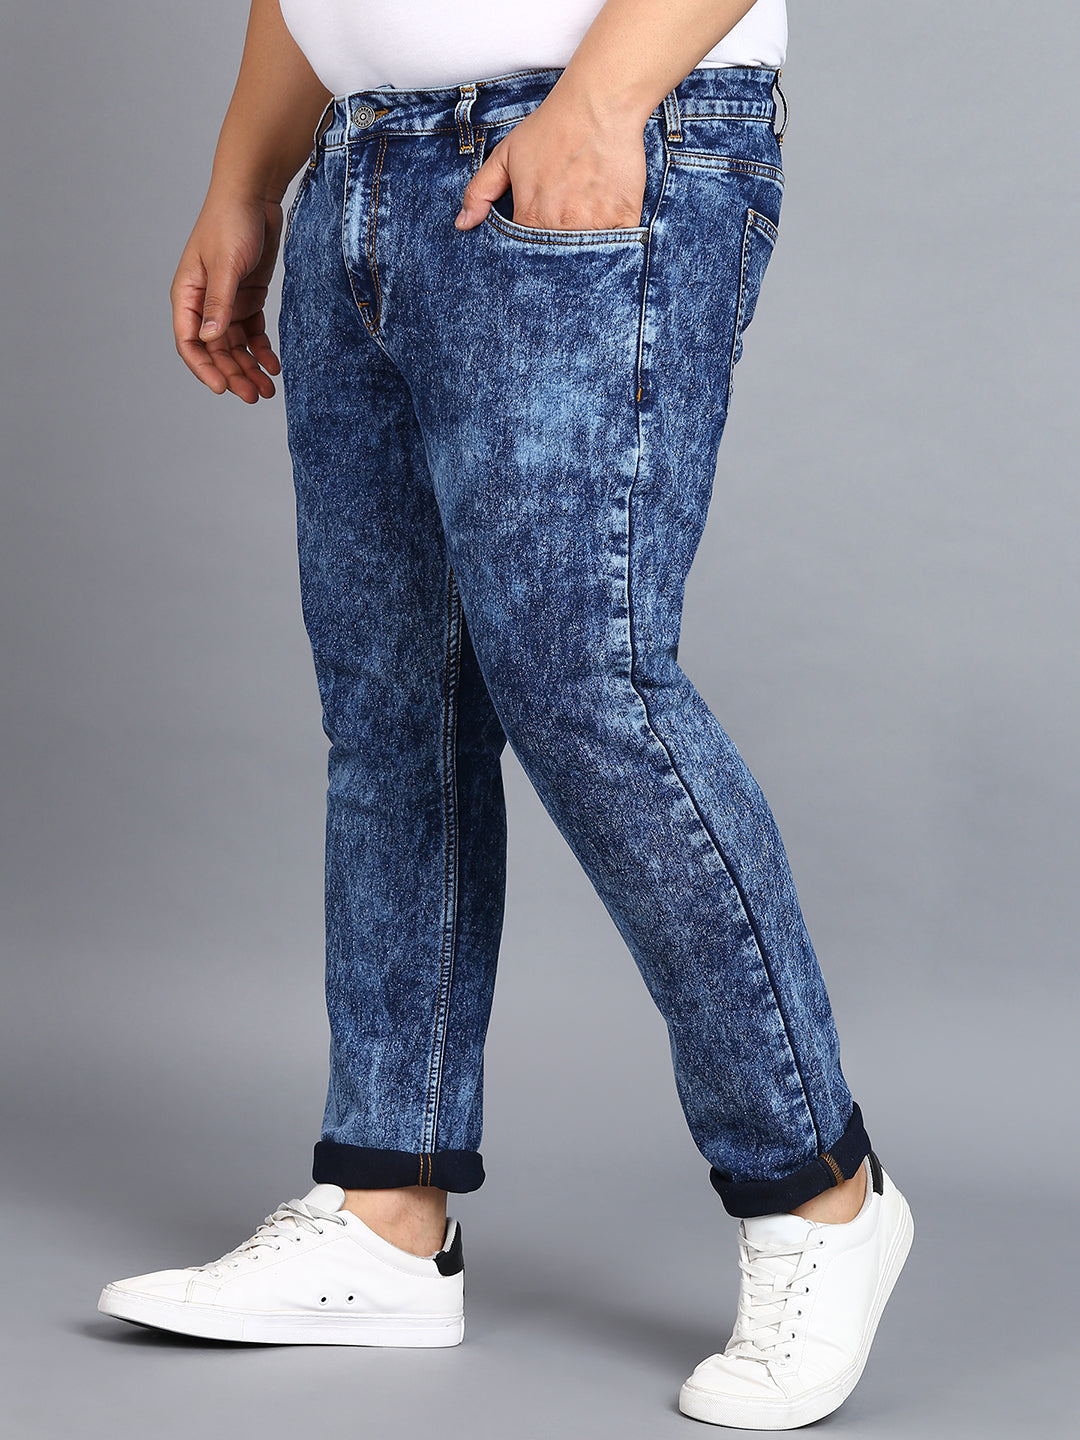 Urbano Plus Men's Dark Blue Regular Fit Washed Jeans Stretchable